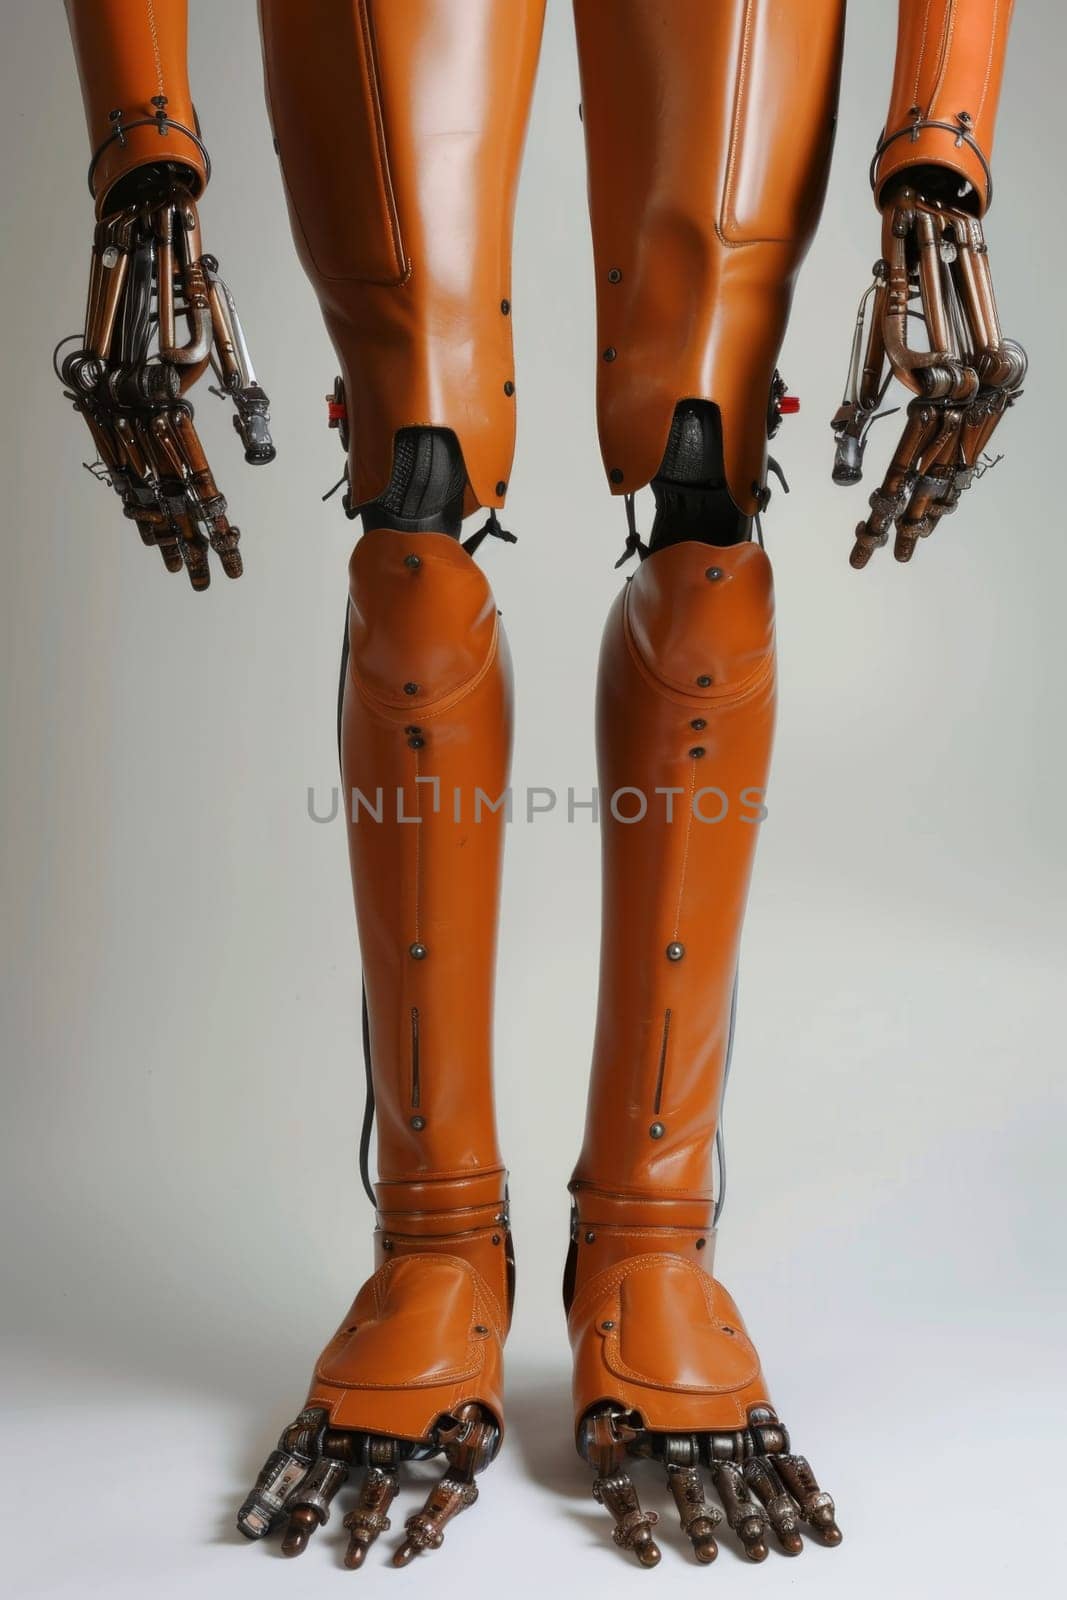 The robot's leg. The concept of robotics by Lobachad